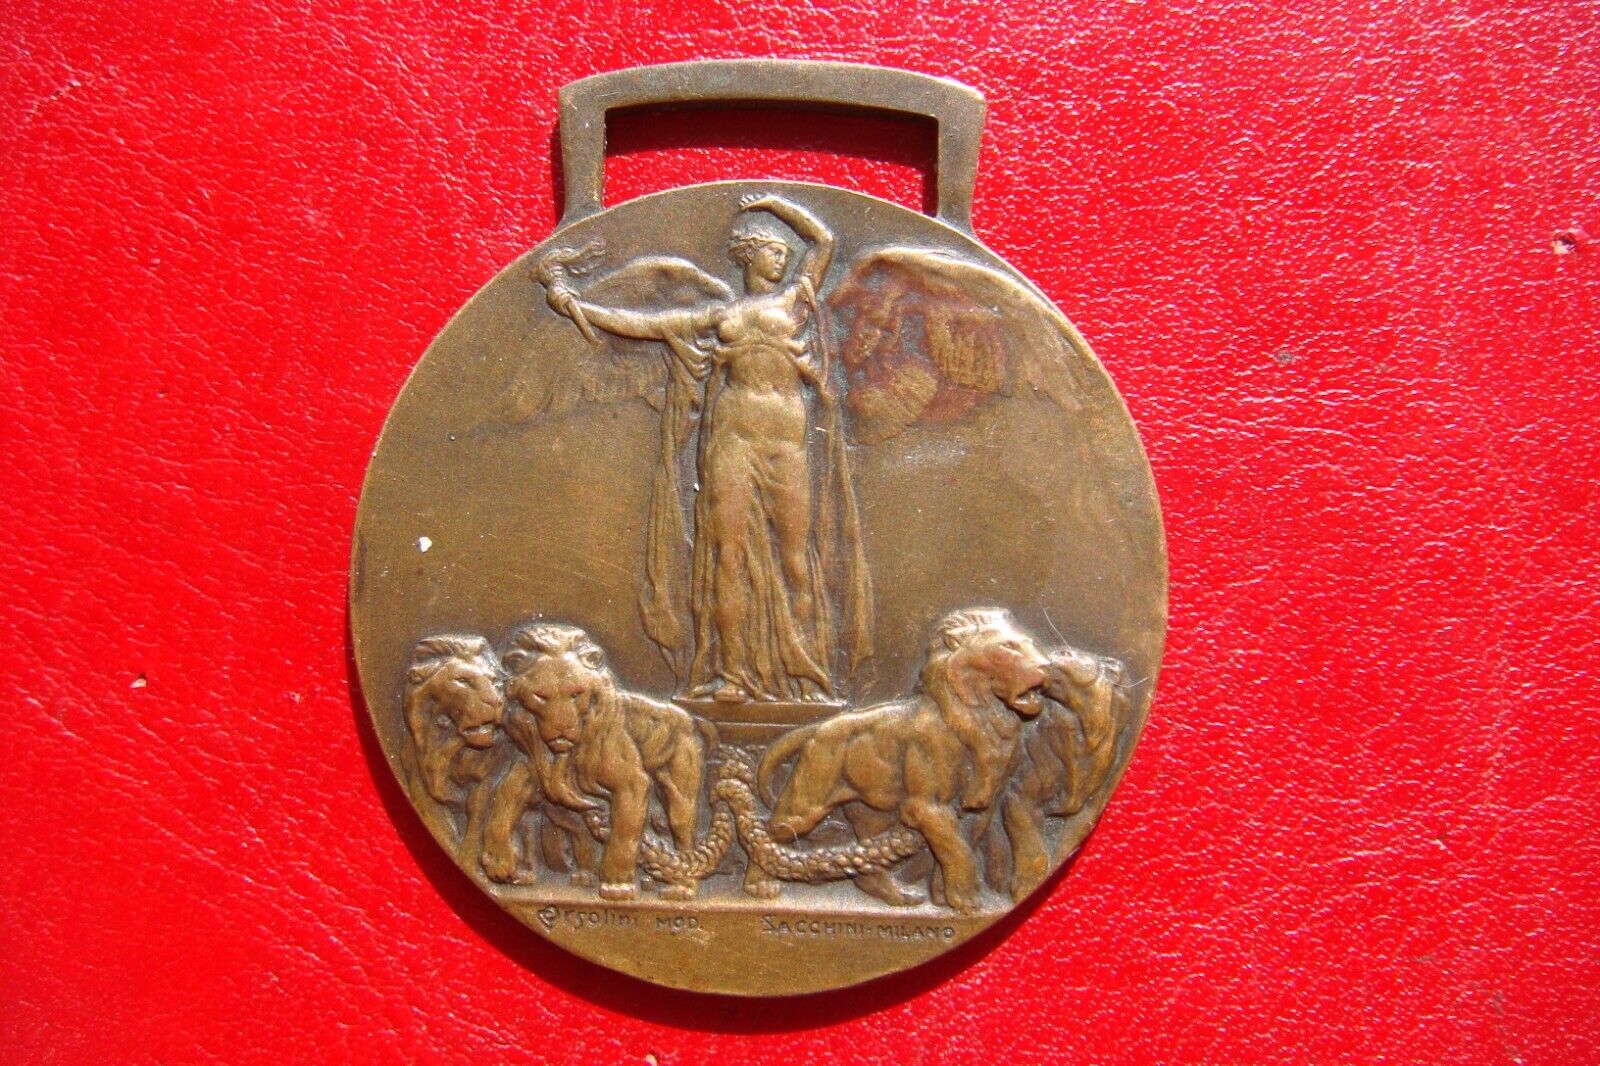 ITALIAN WWI Italy Victory Medal 1915-18 Type I marked Sacchini-Milano 